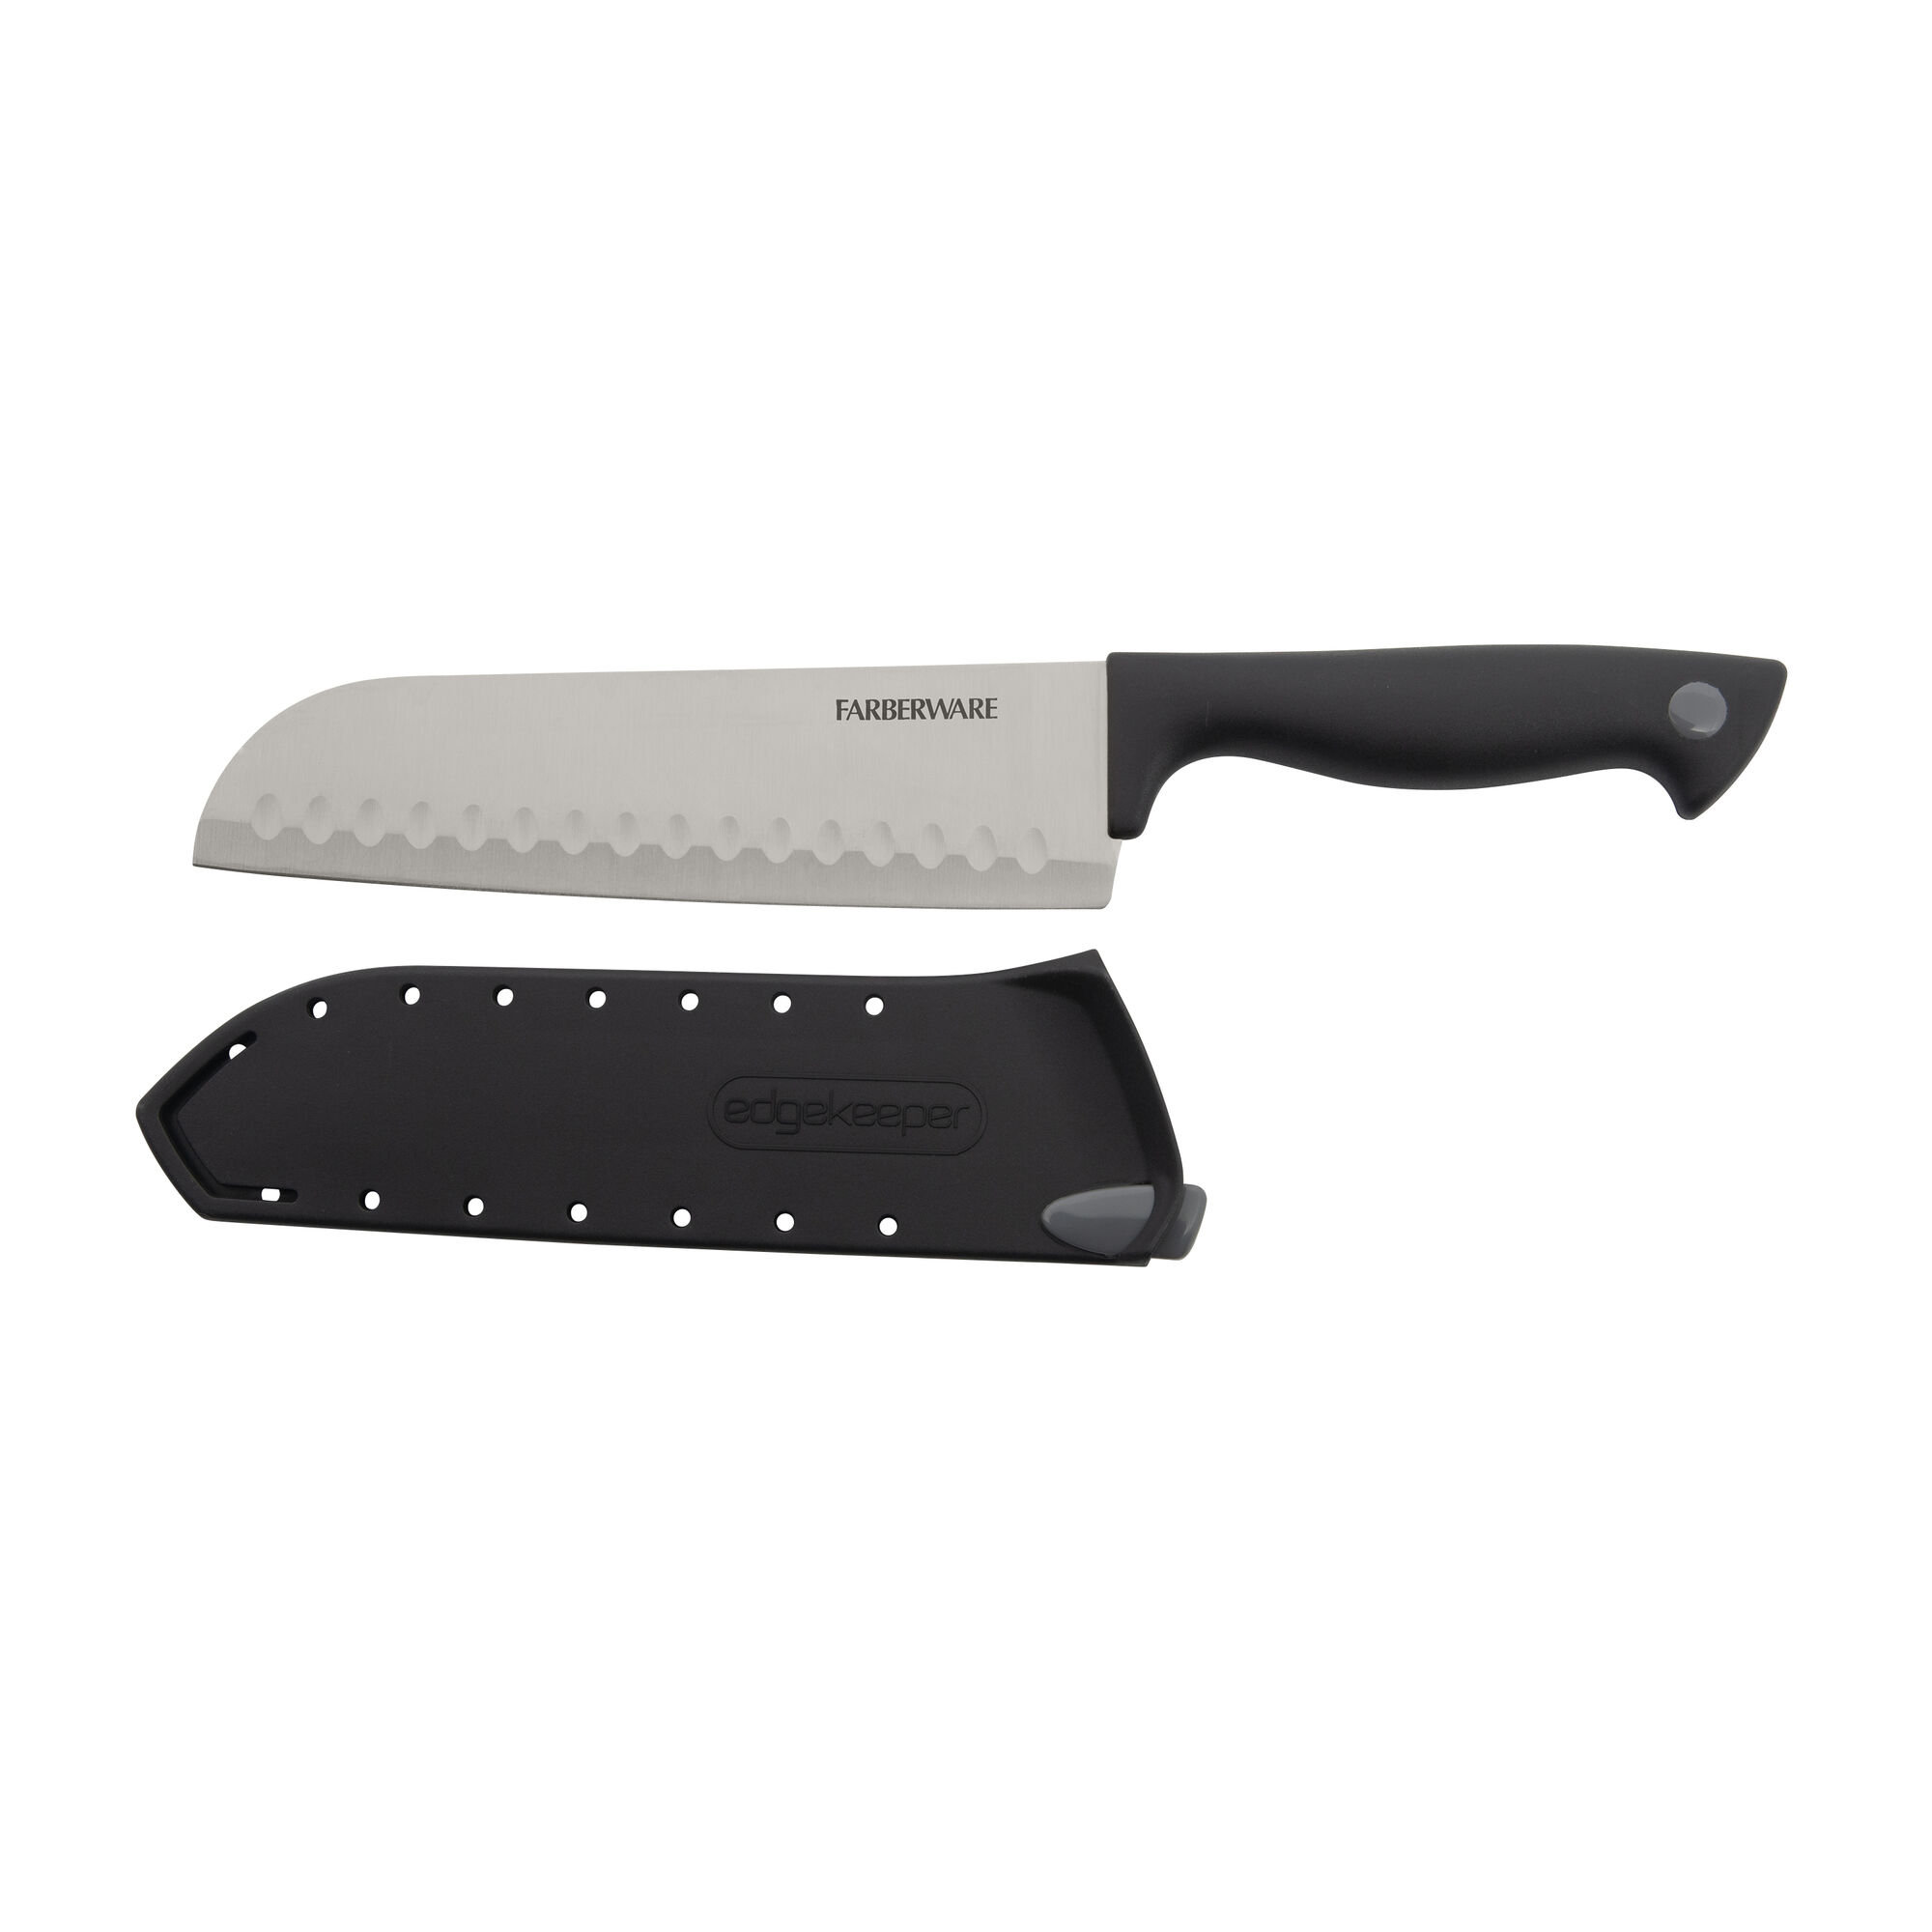 Farberware Ceramic 5-inch Utility Knife with Custom-Fit Blade Cover,  Razor-Sharp Kitchen Knife with Ergonomic, Soft-Grip Handle,  Dishwasher-Safe